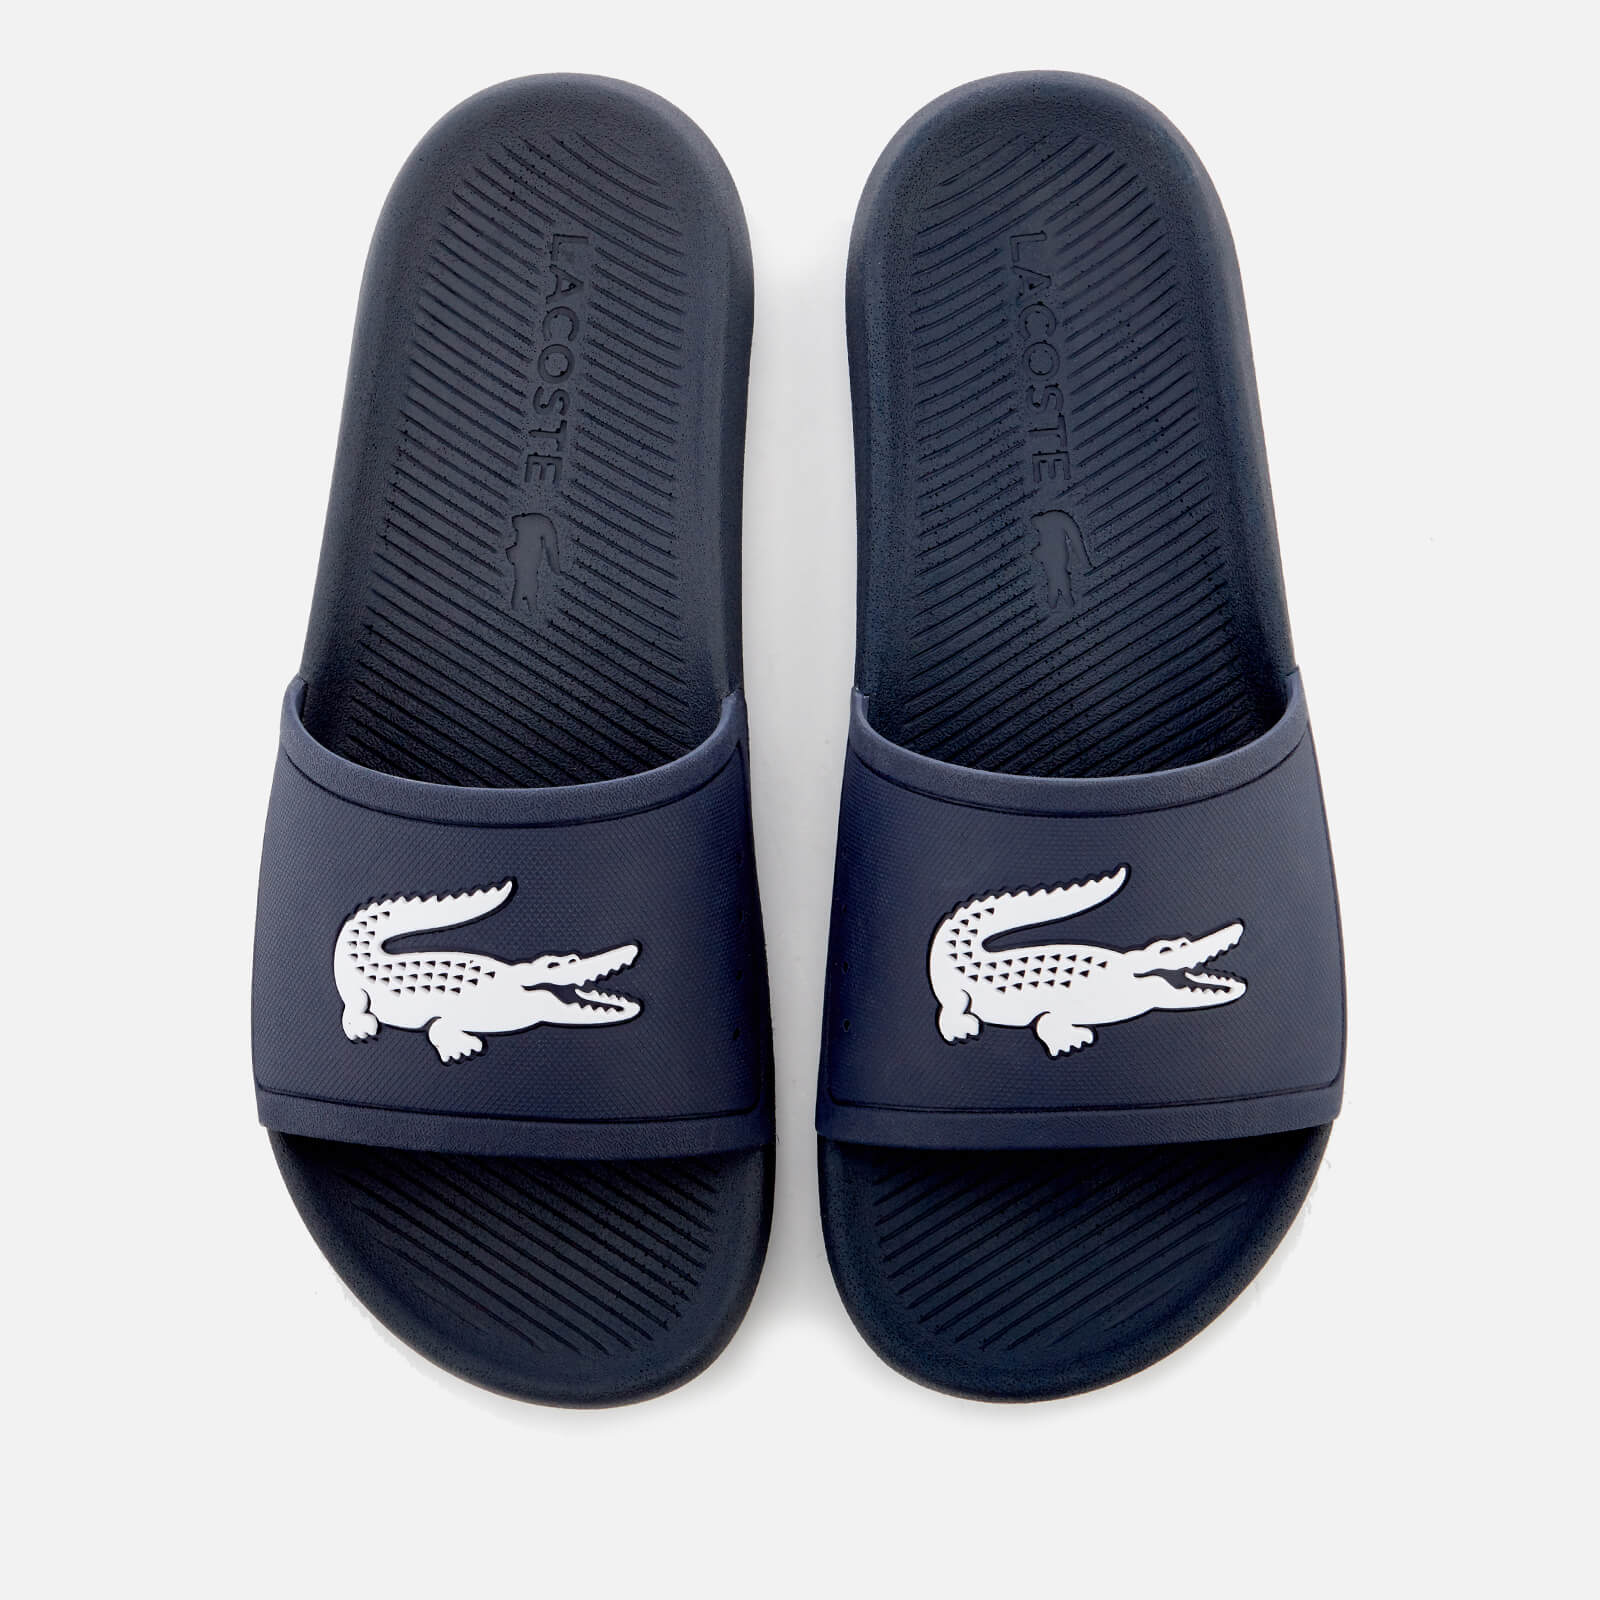 Lacoste Men's Croco Slide 119 1 Sandals - Navy/White - UK 8 - Navy/White